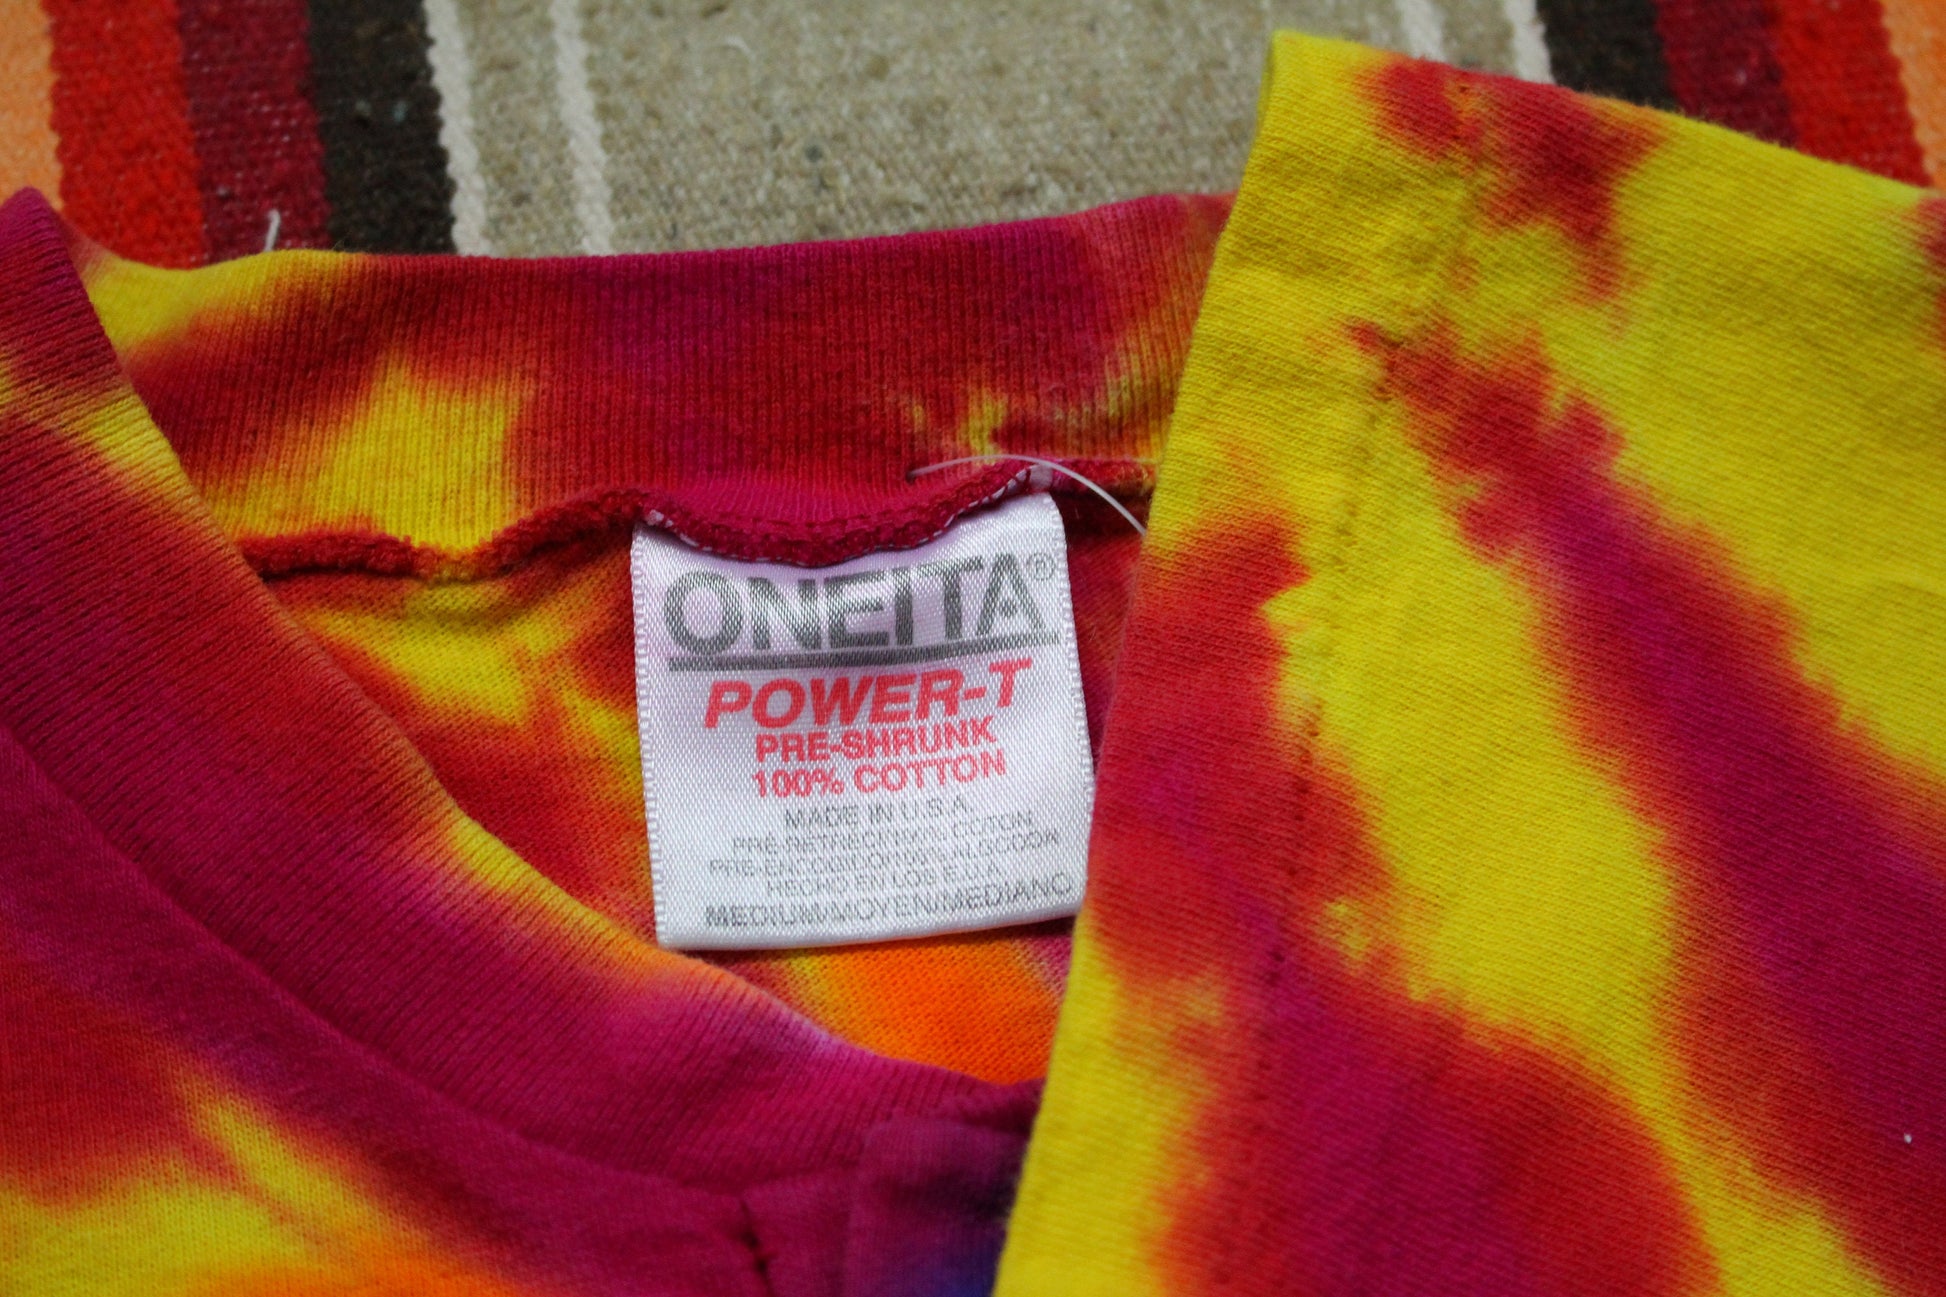 1990s Oneita Power-T Tie Dye Henley T-Shirt Made in USA Size M